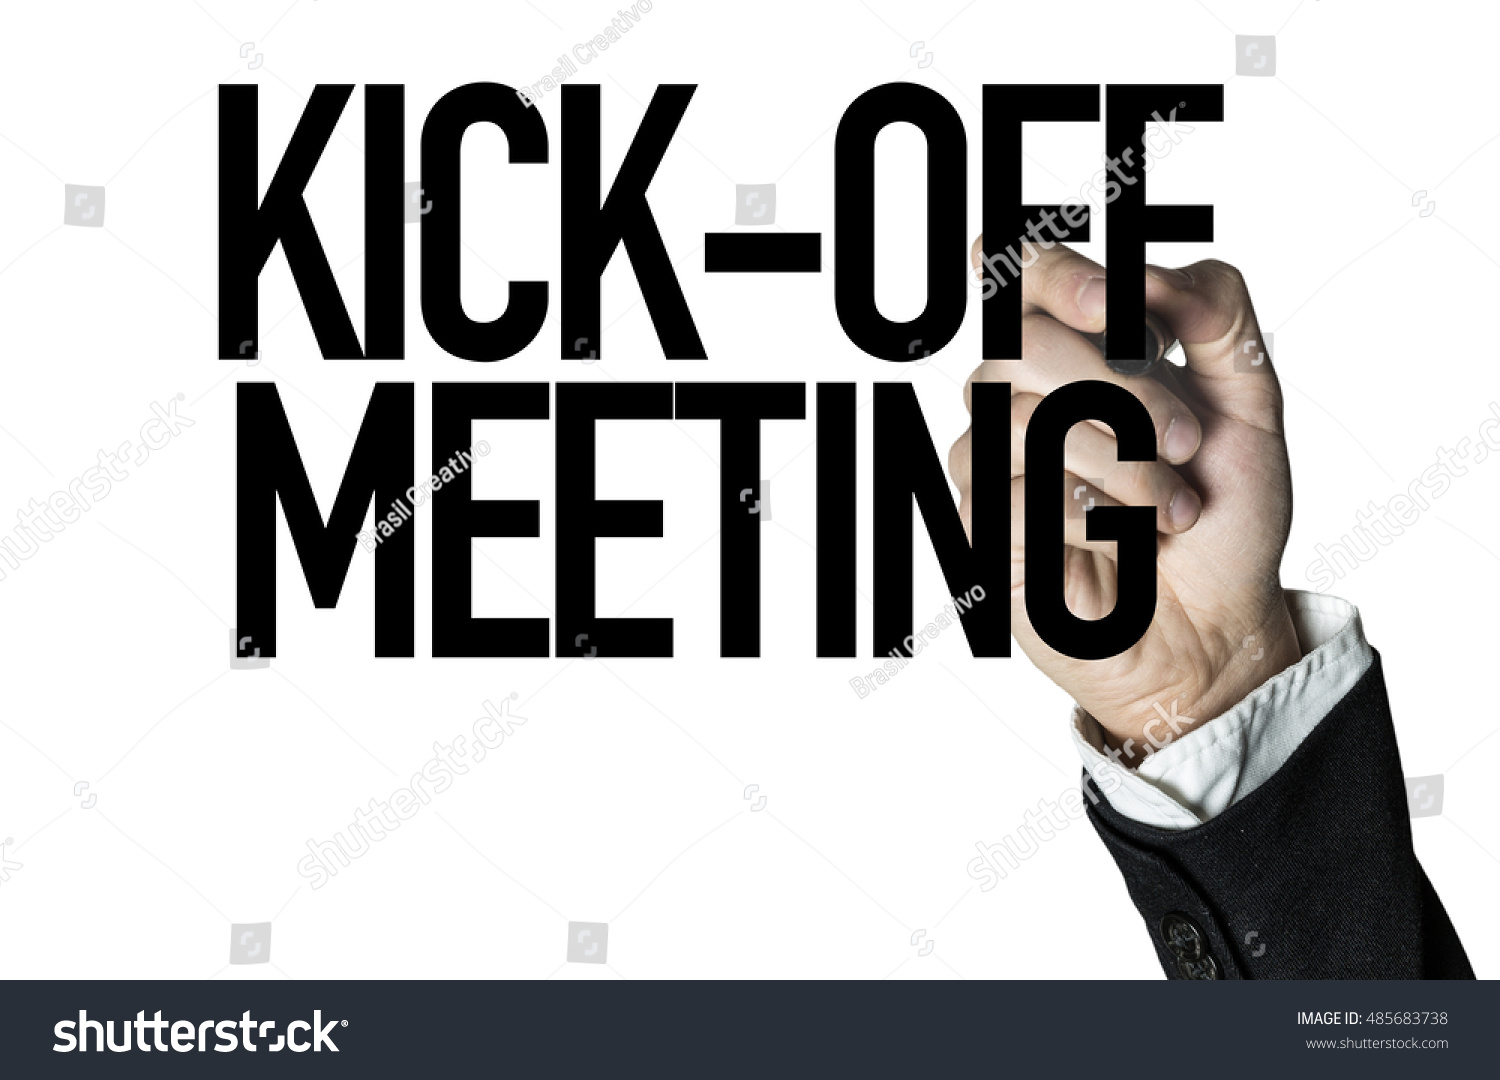 Kick-Off Meeting #485683738